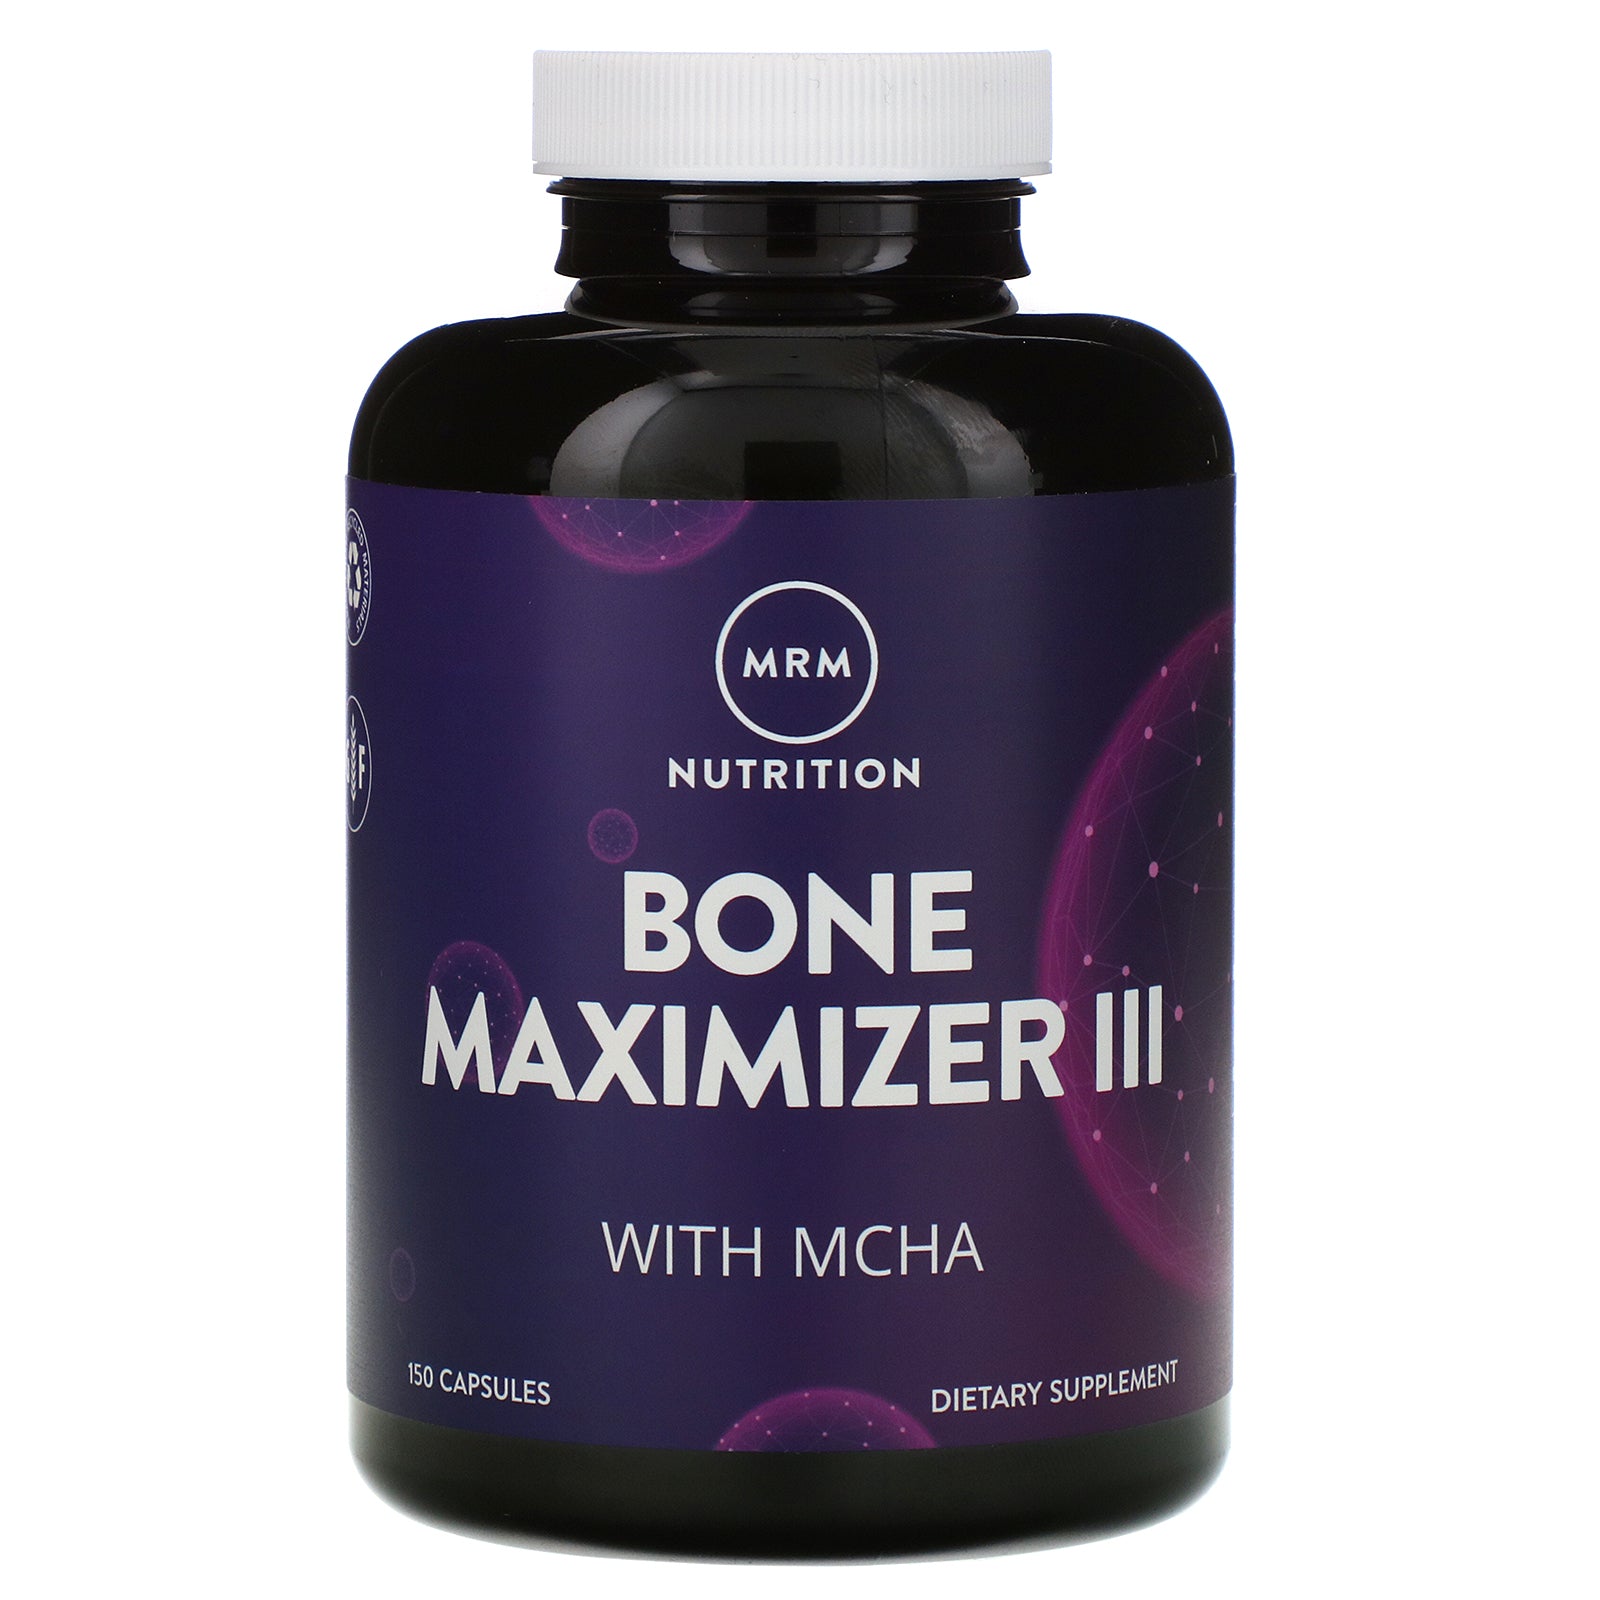 MRM, Nutrition, Bone Maximizer III with MCHA